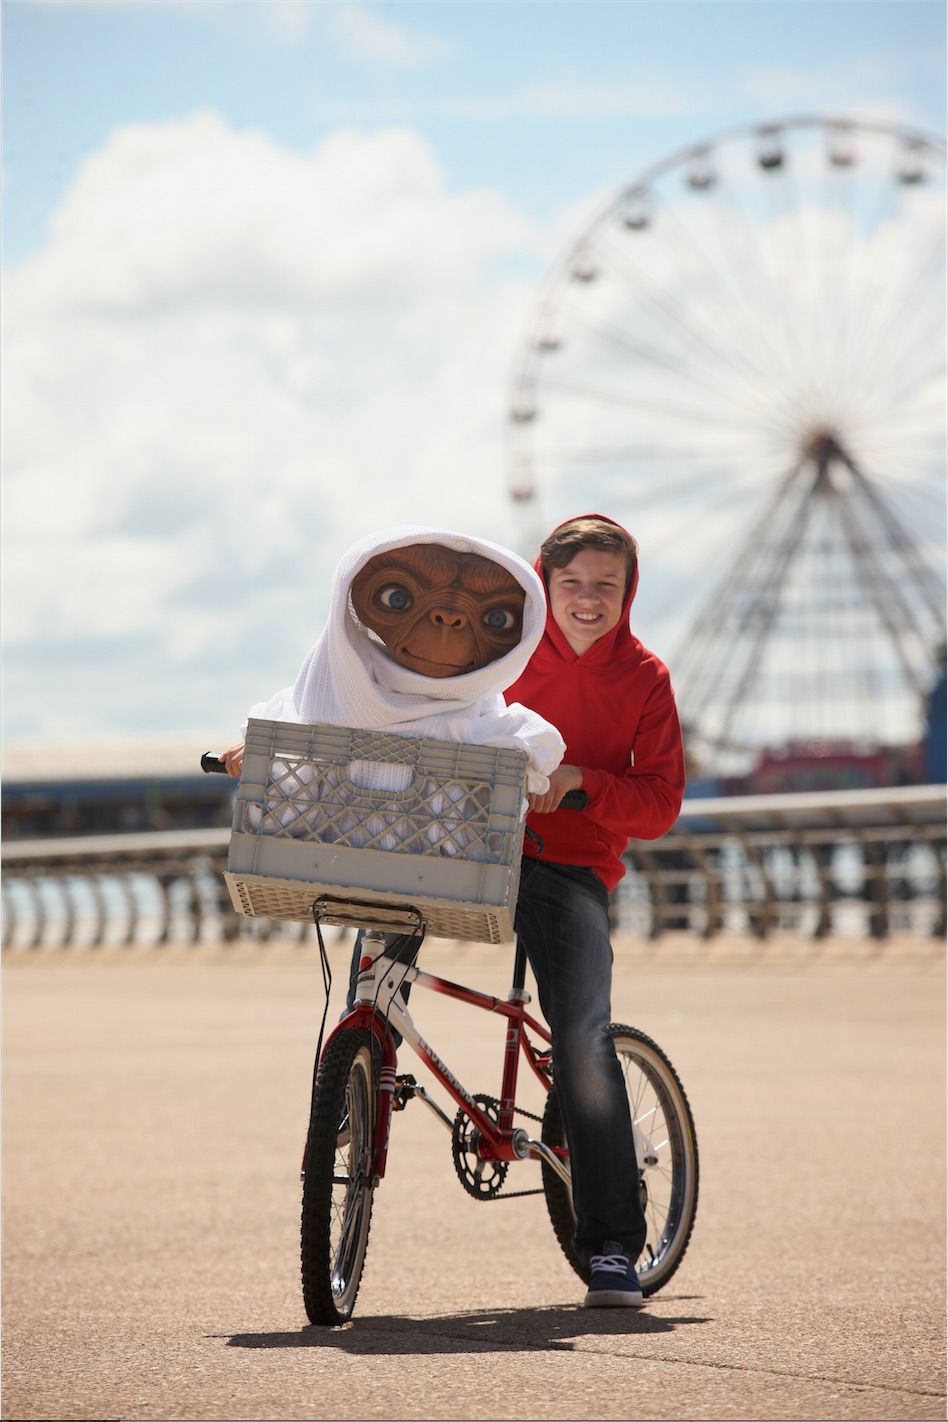 E.T wax figure at Madame Tussauds Blackpool